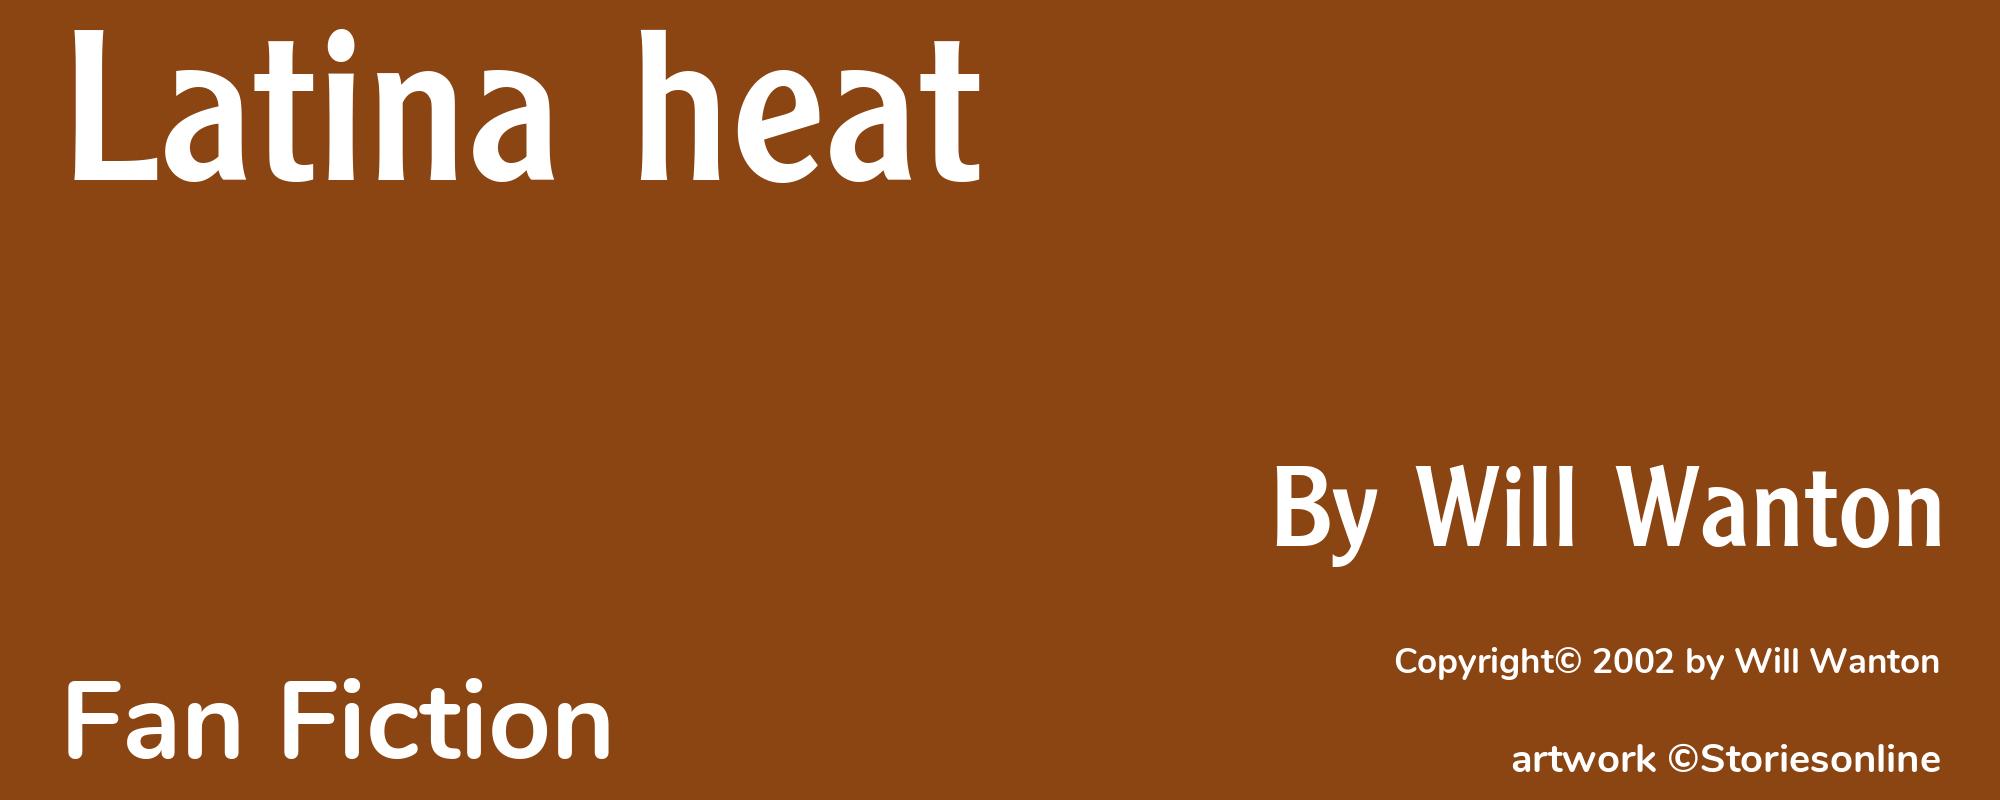 Latina heat - Cover